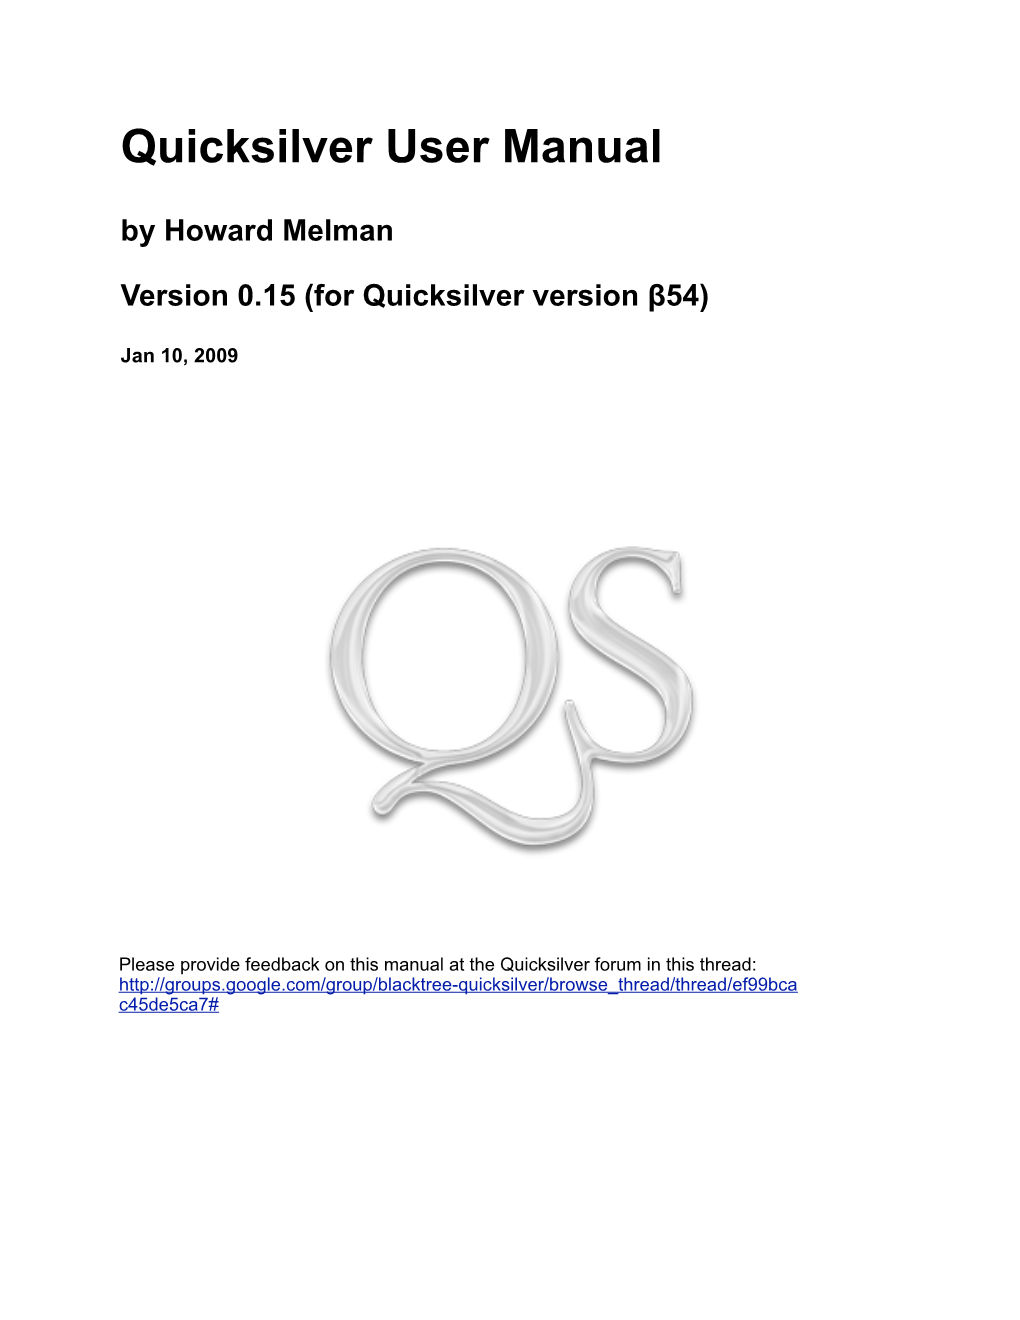 Quicksilver User Manual by Howard Melman